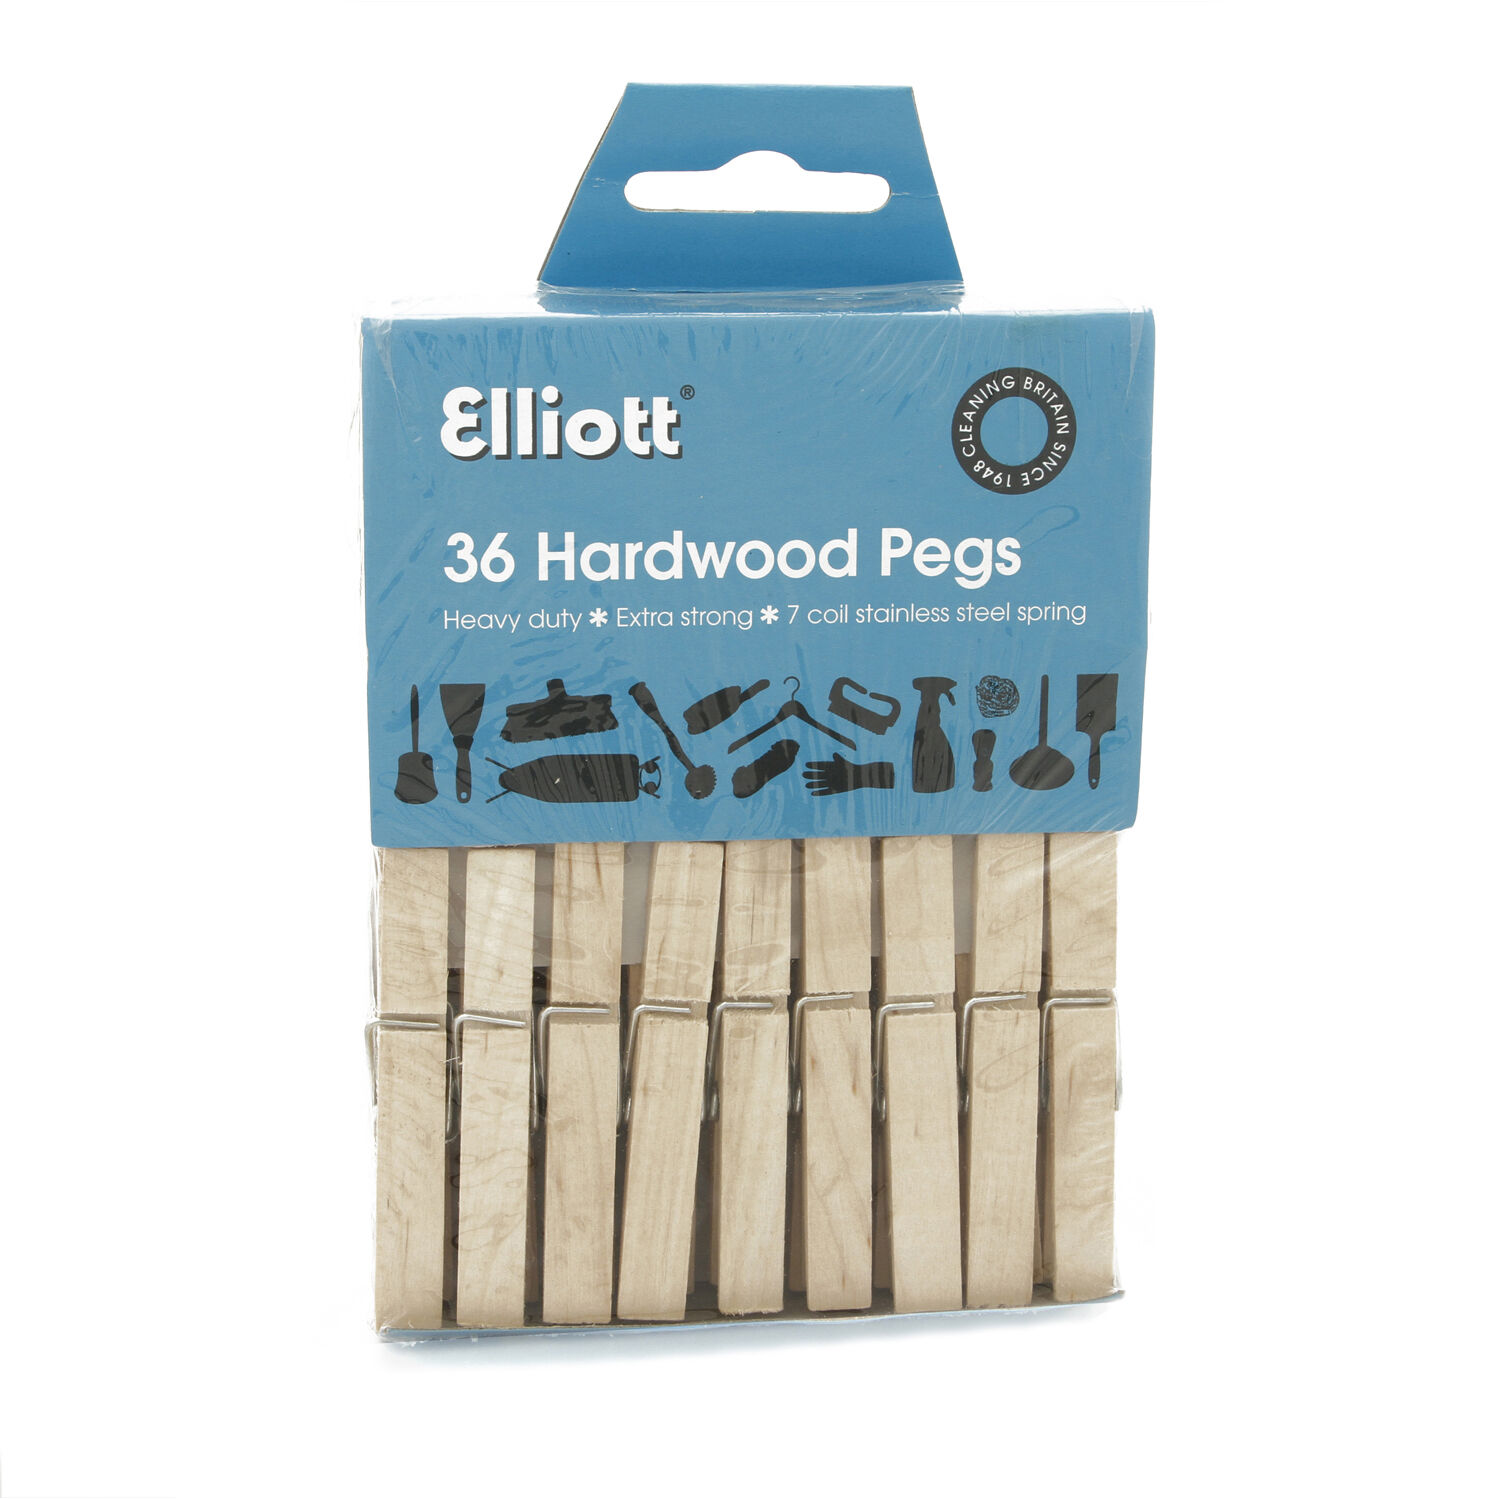 Elliott 36 Wooden Hardwood Clothes Pegs 